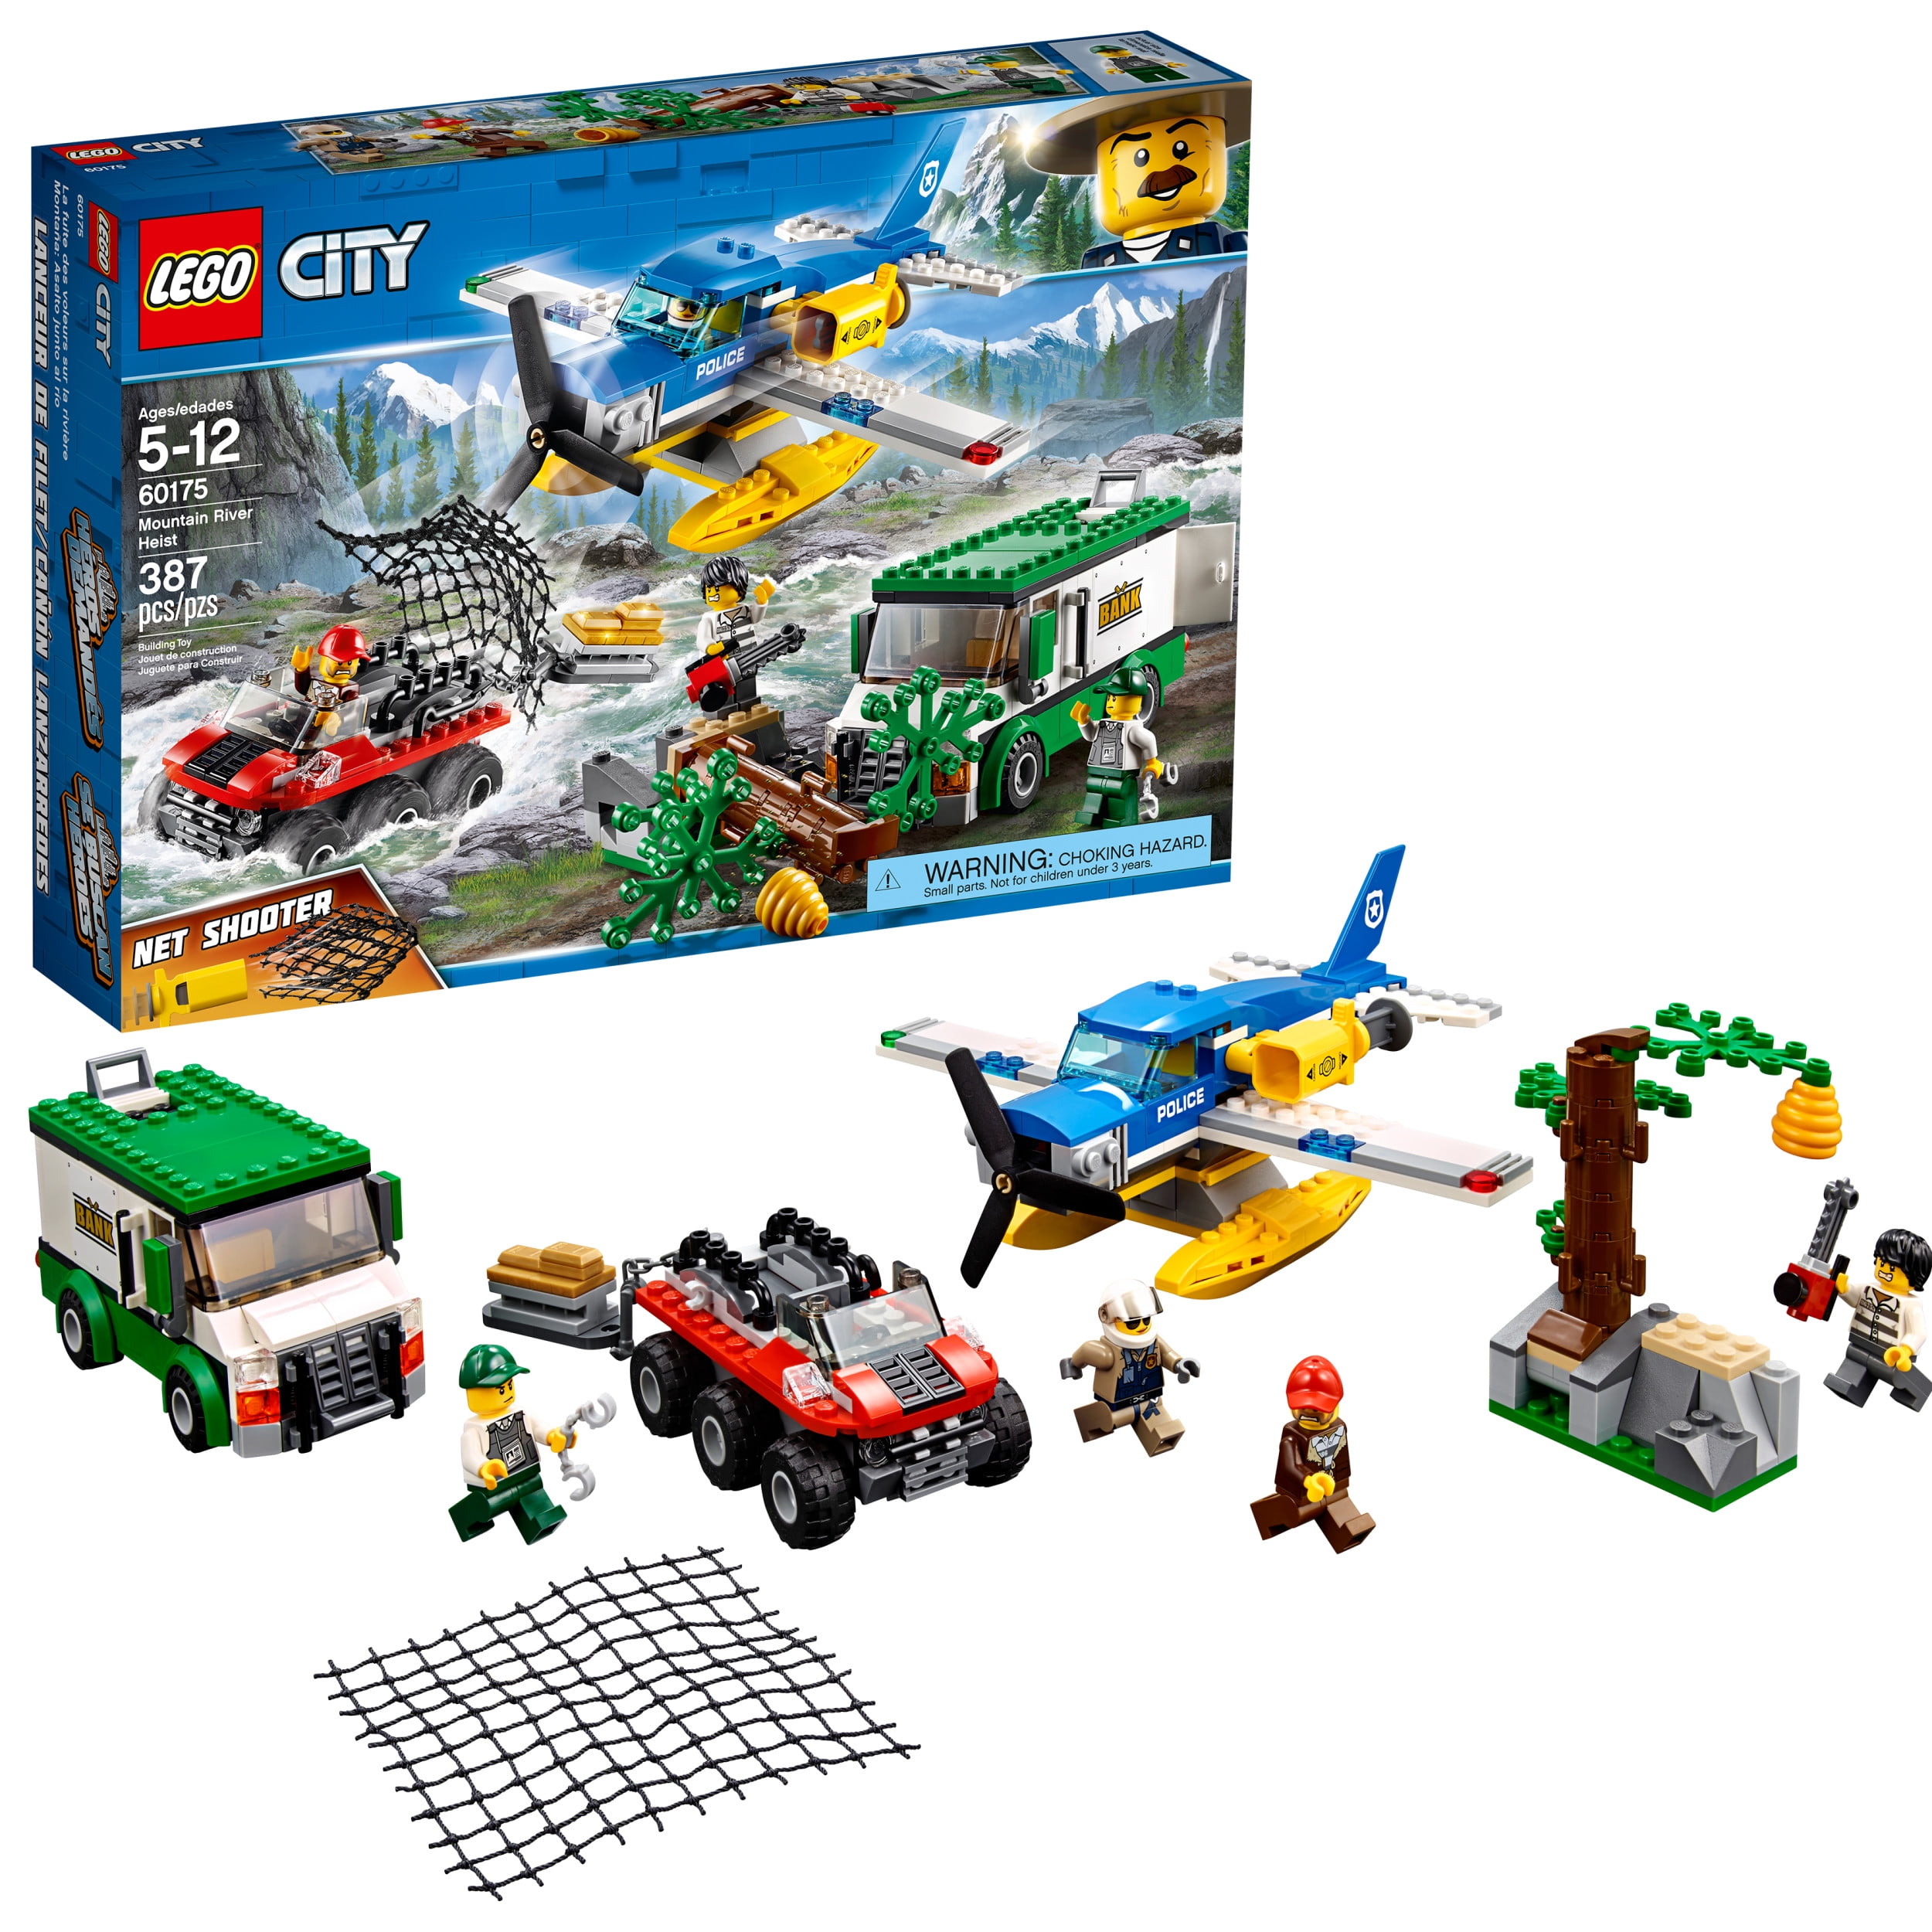 LEGO City Mountain River Heist 60175 Building Set (387 ...